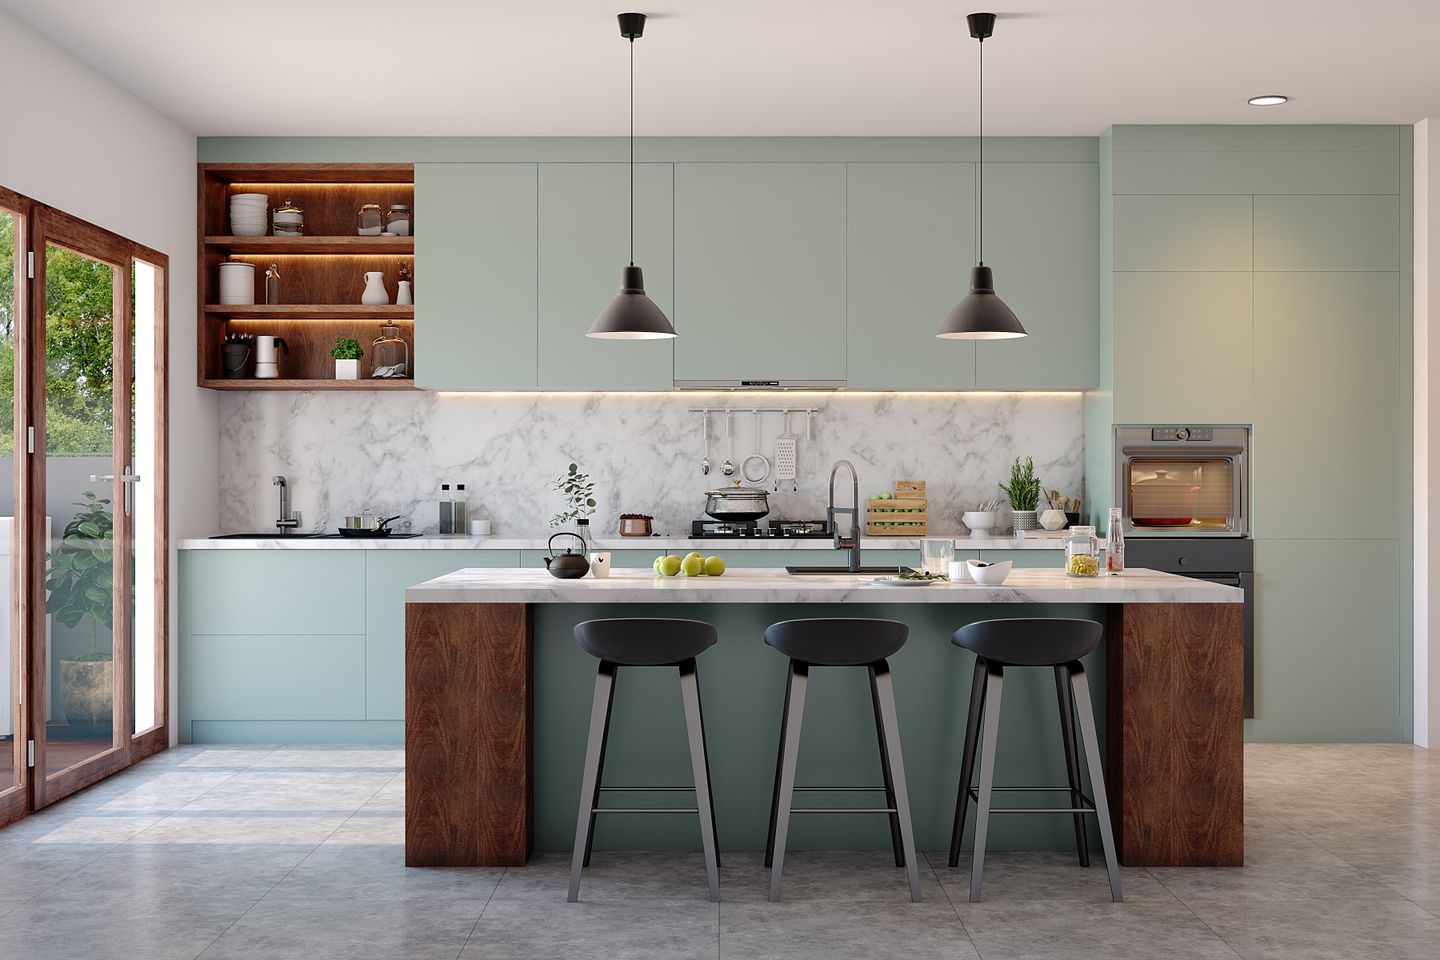 Pastel Spacious Kitchen Design With In-built Appliances | Livspace